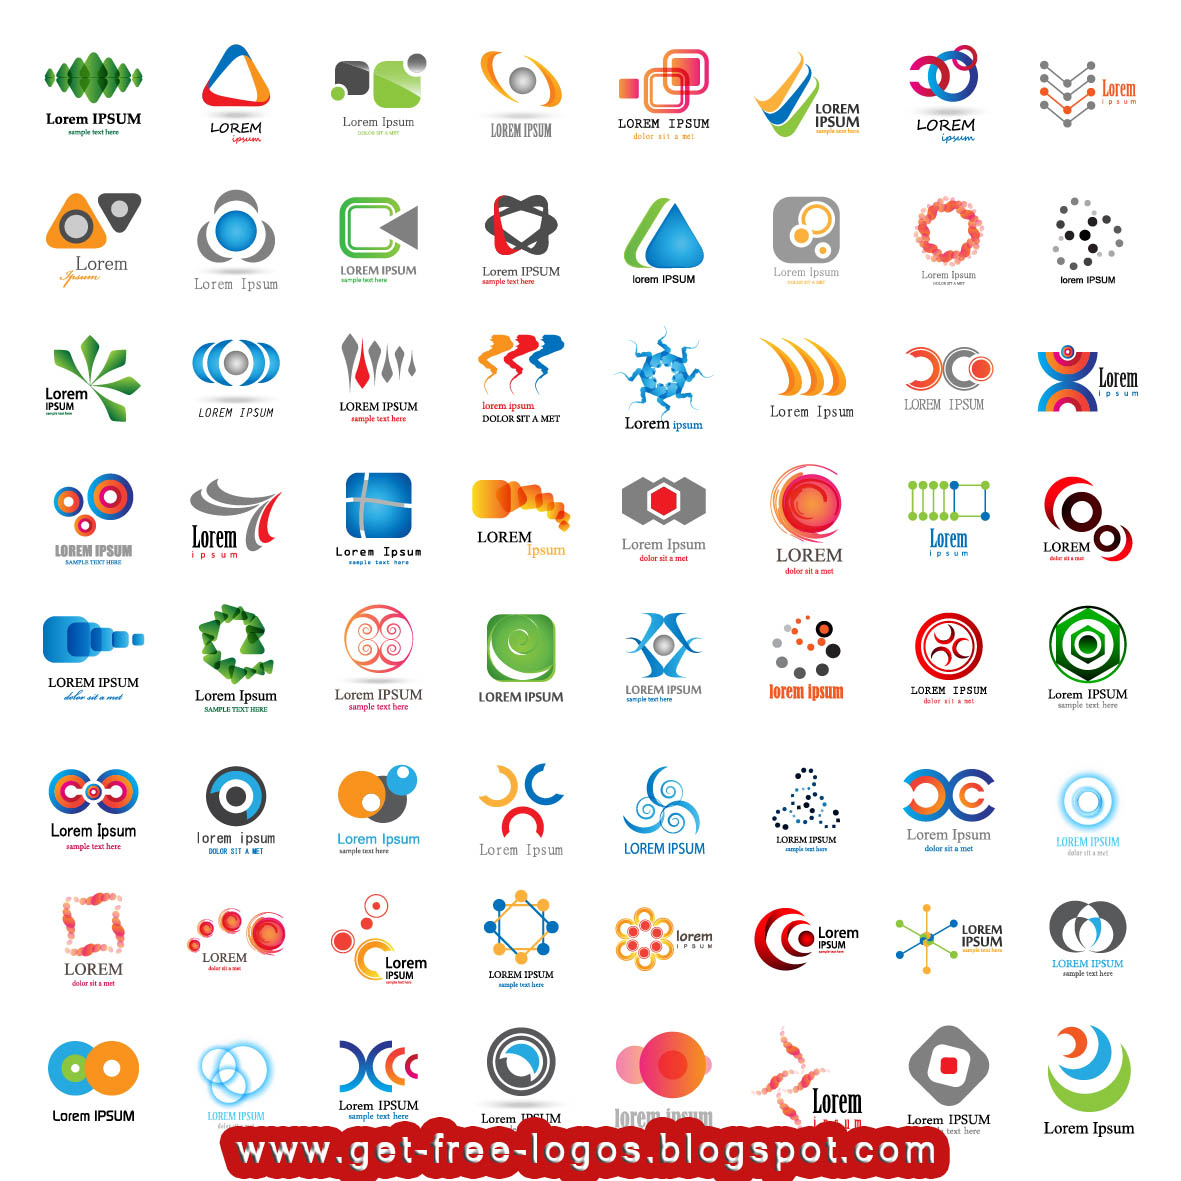 Get Free Logos: Free - Shutterstock Business Icons Set